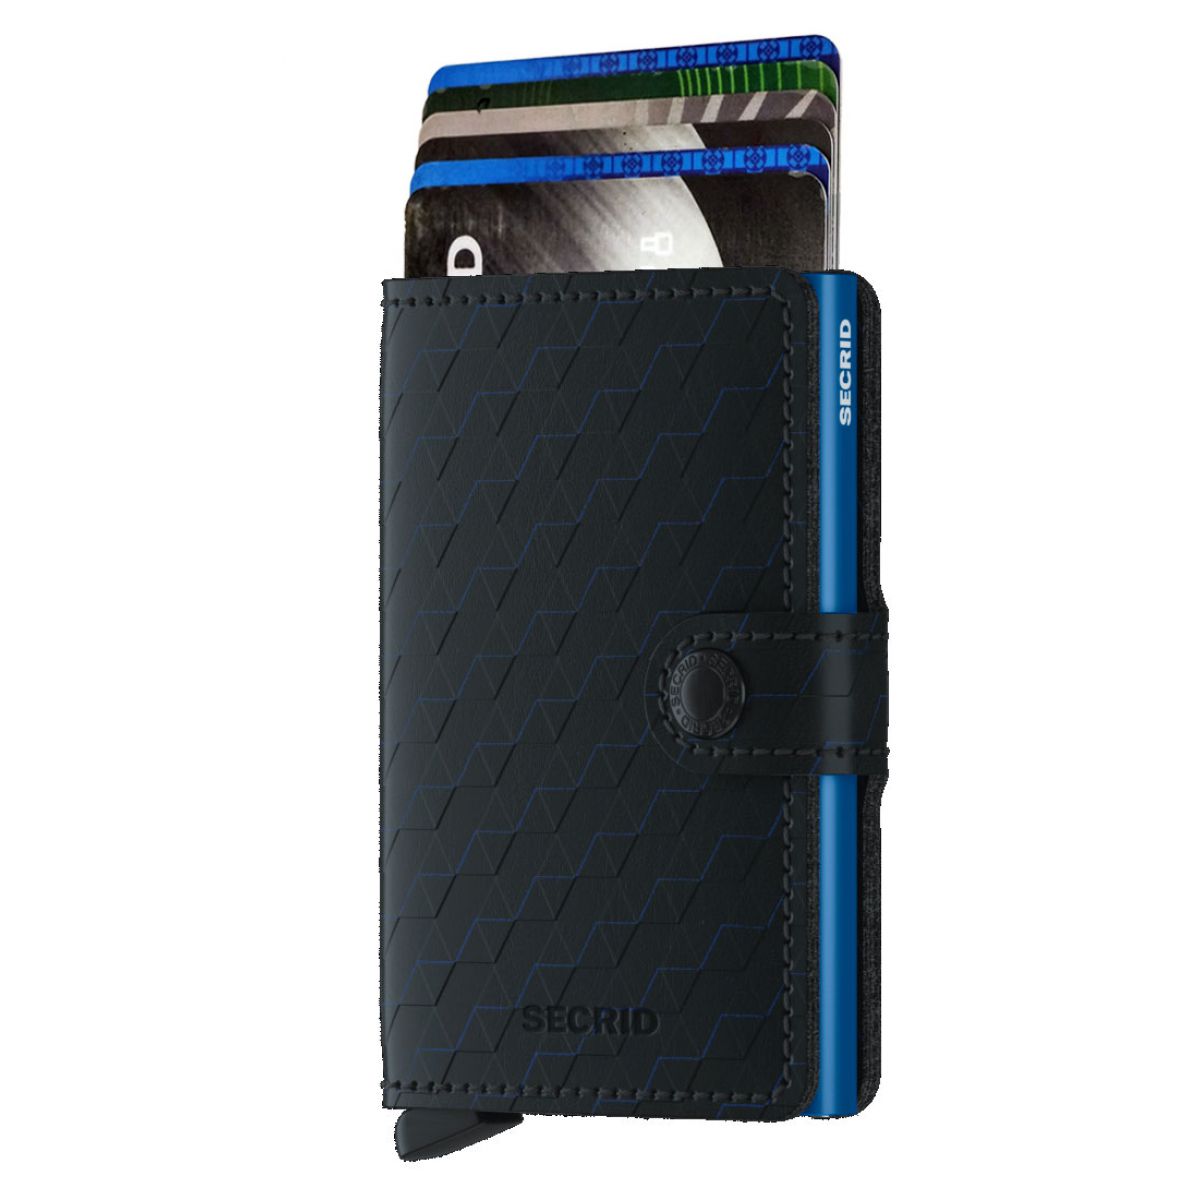 verlamming niettemin IJver Secrid mini wallet leather optical black - MOP-black - 45,41€